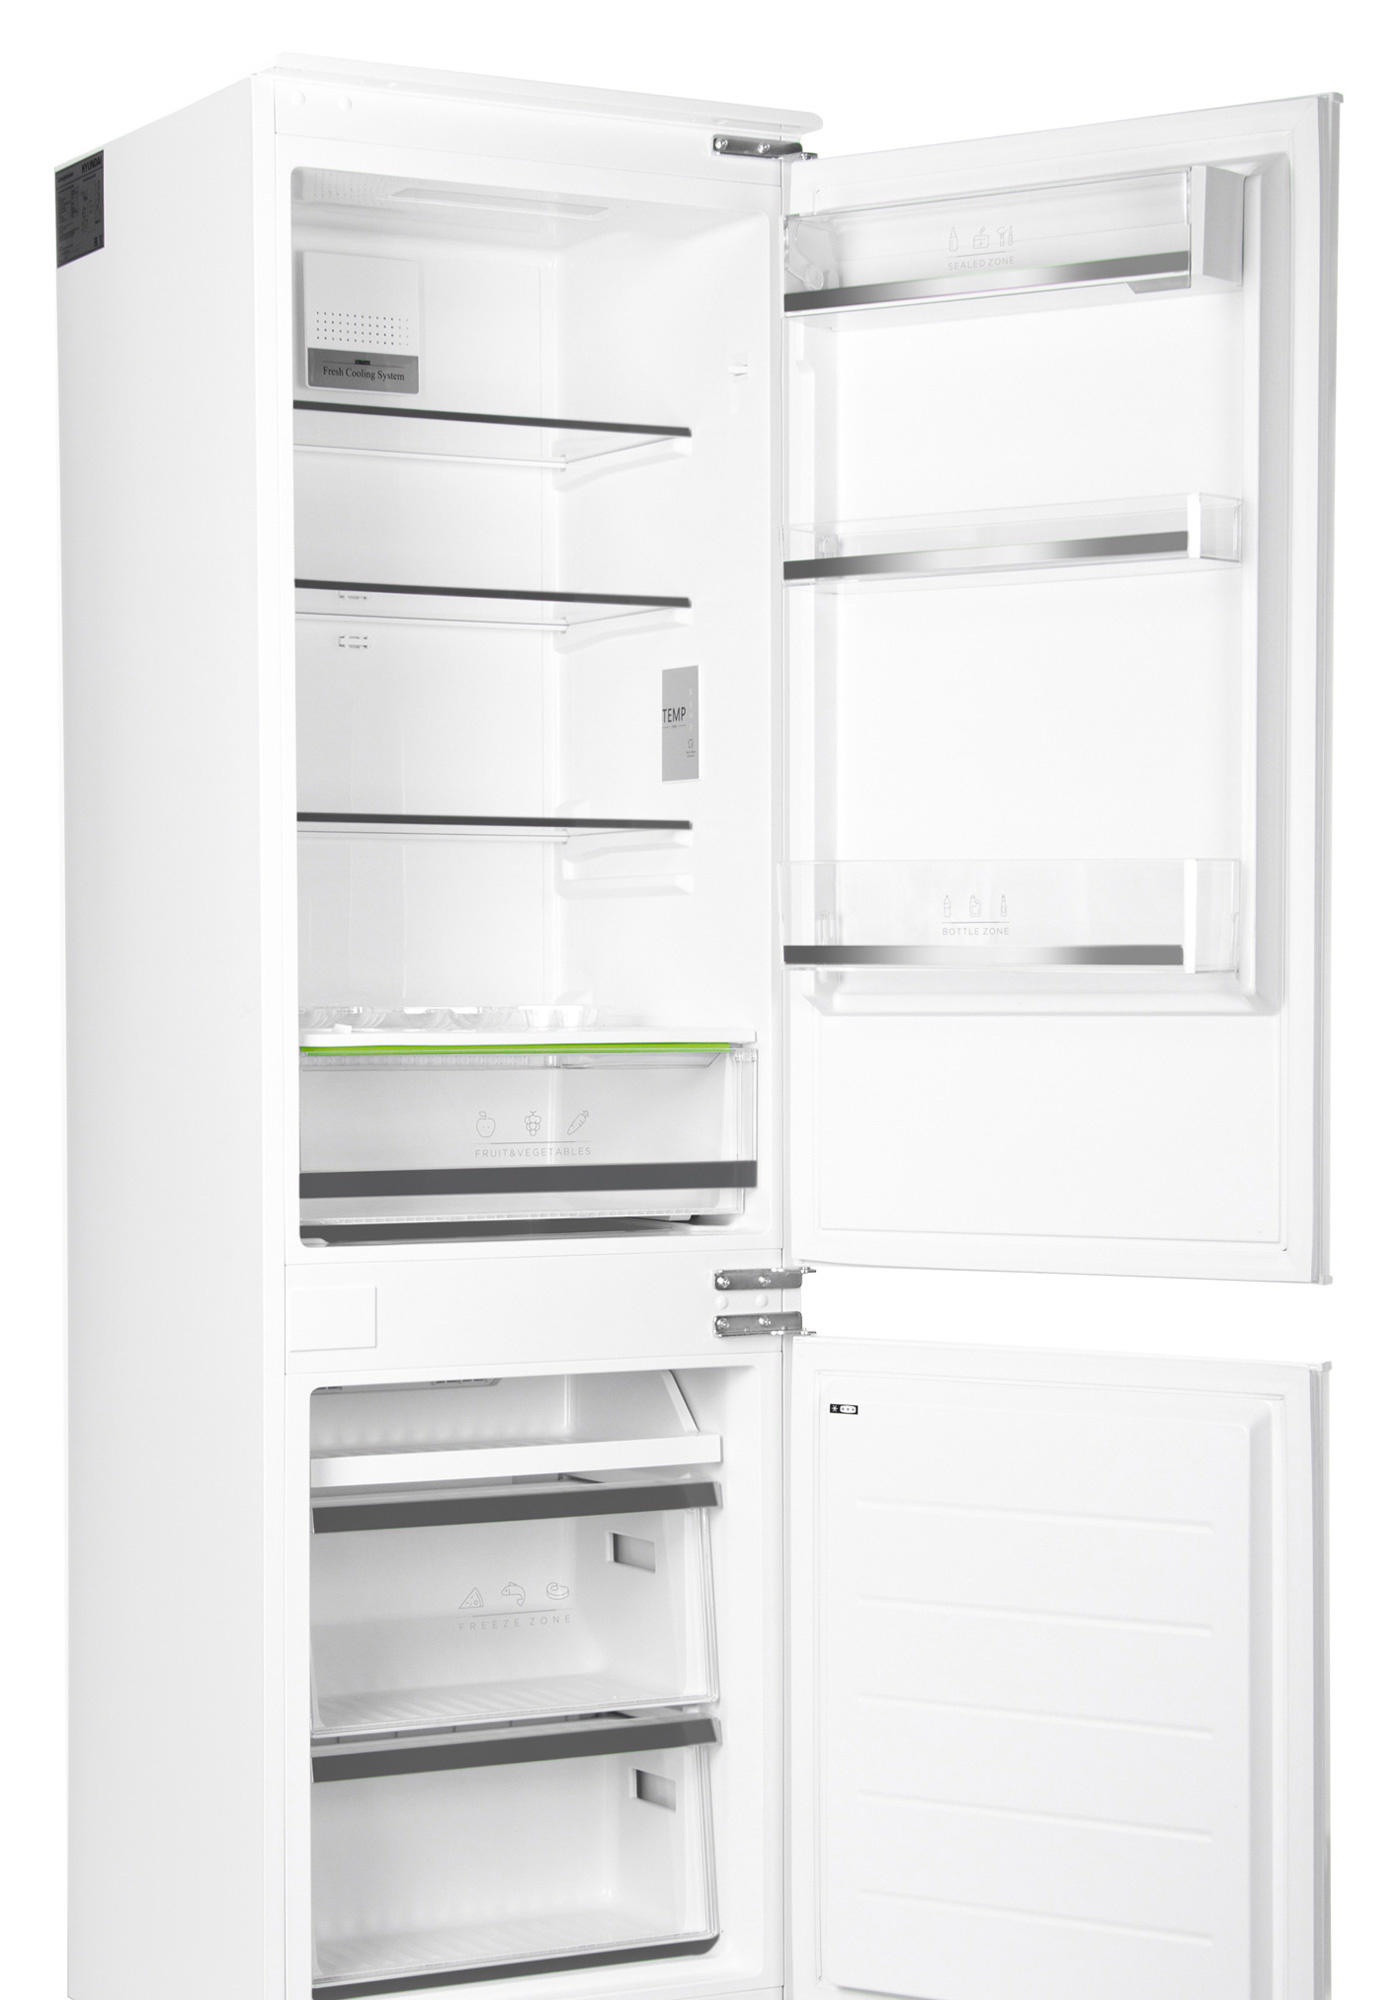 Холодильник Hyundai CC4033FV (двухкамерный)